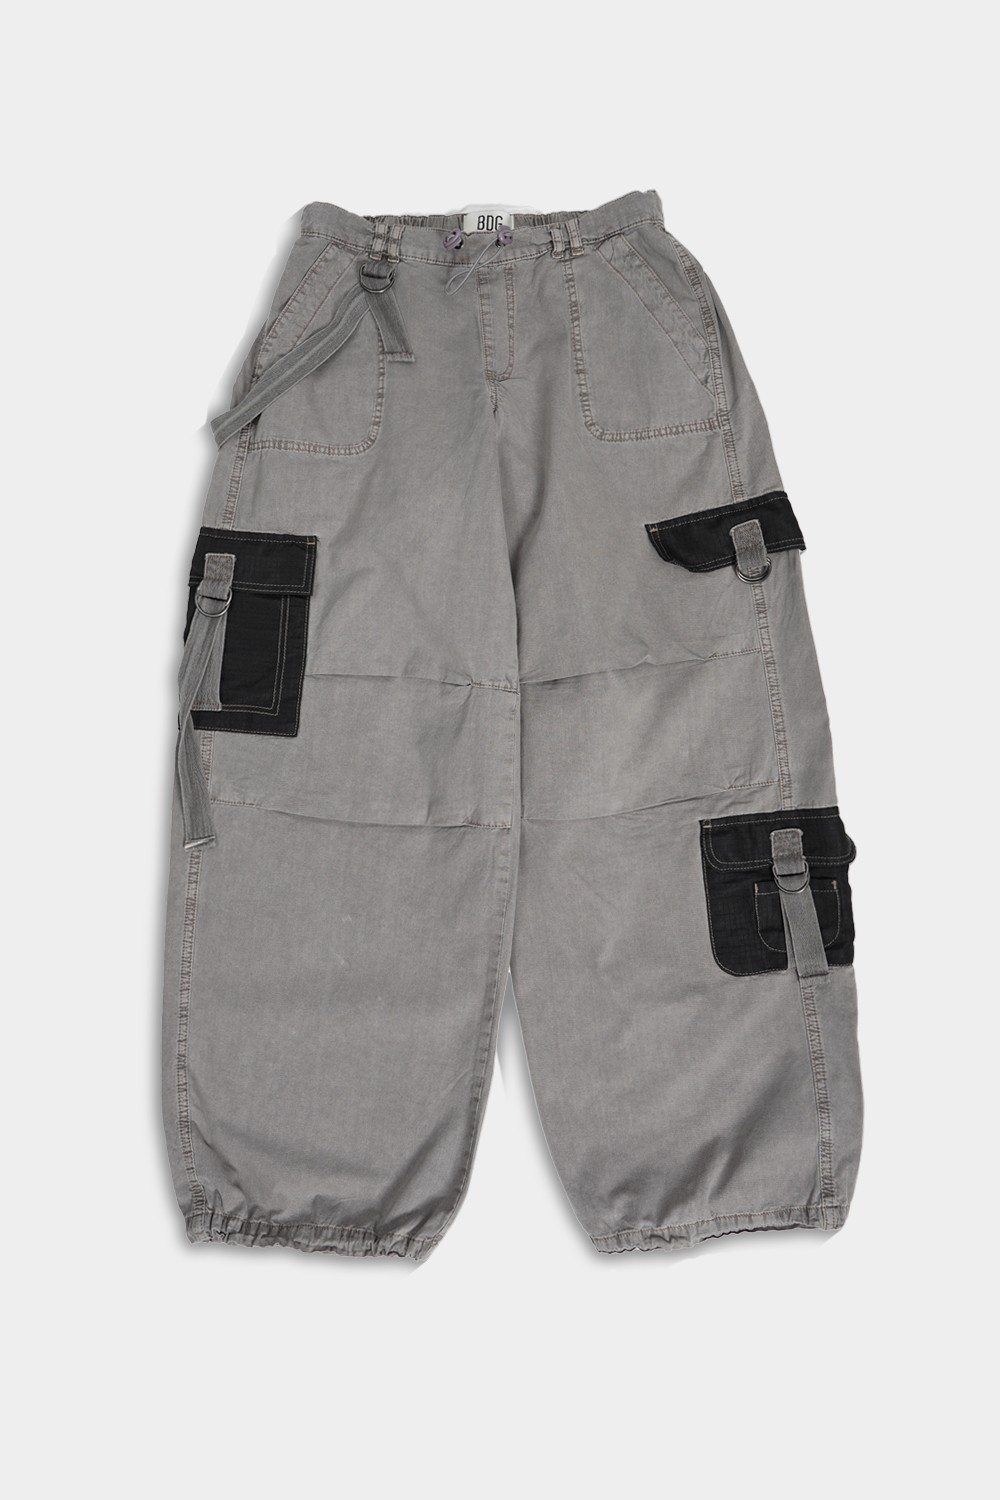 Ultra Baggy Two Tone Cargo Pants (URBN-B-233)